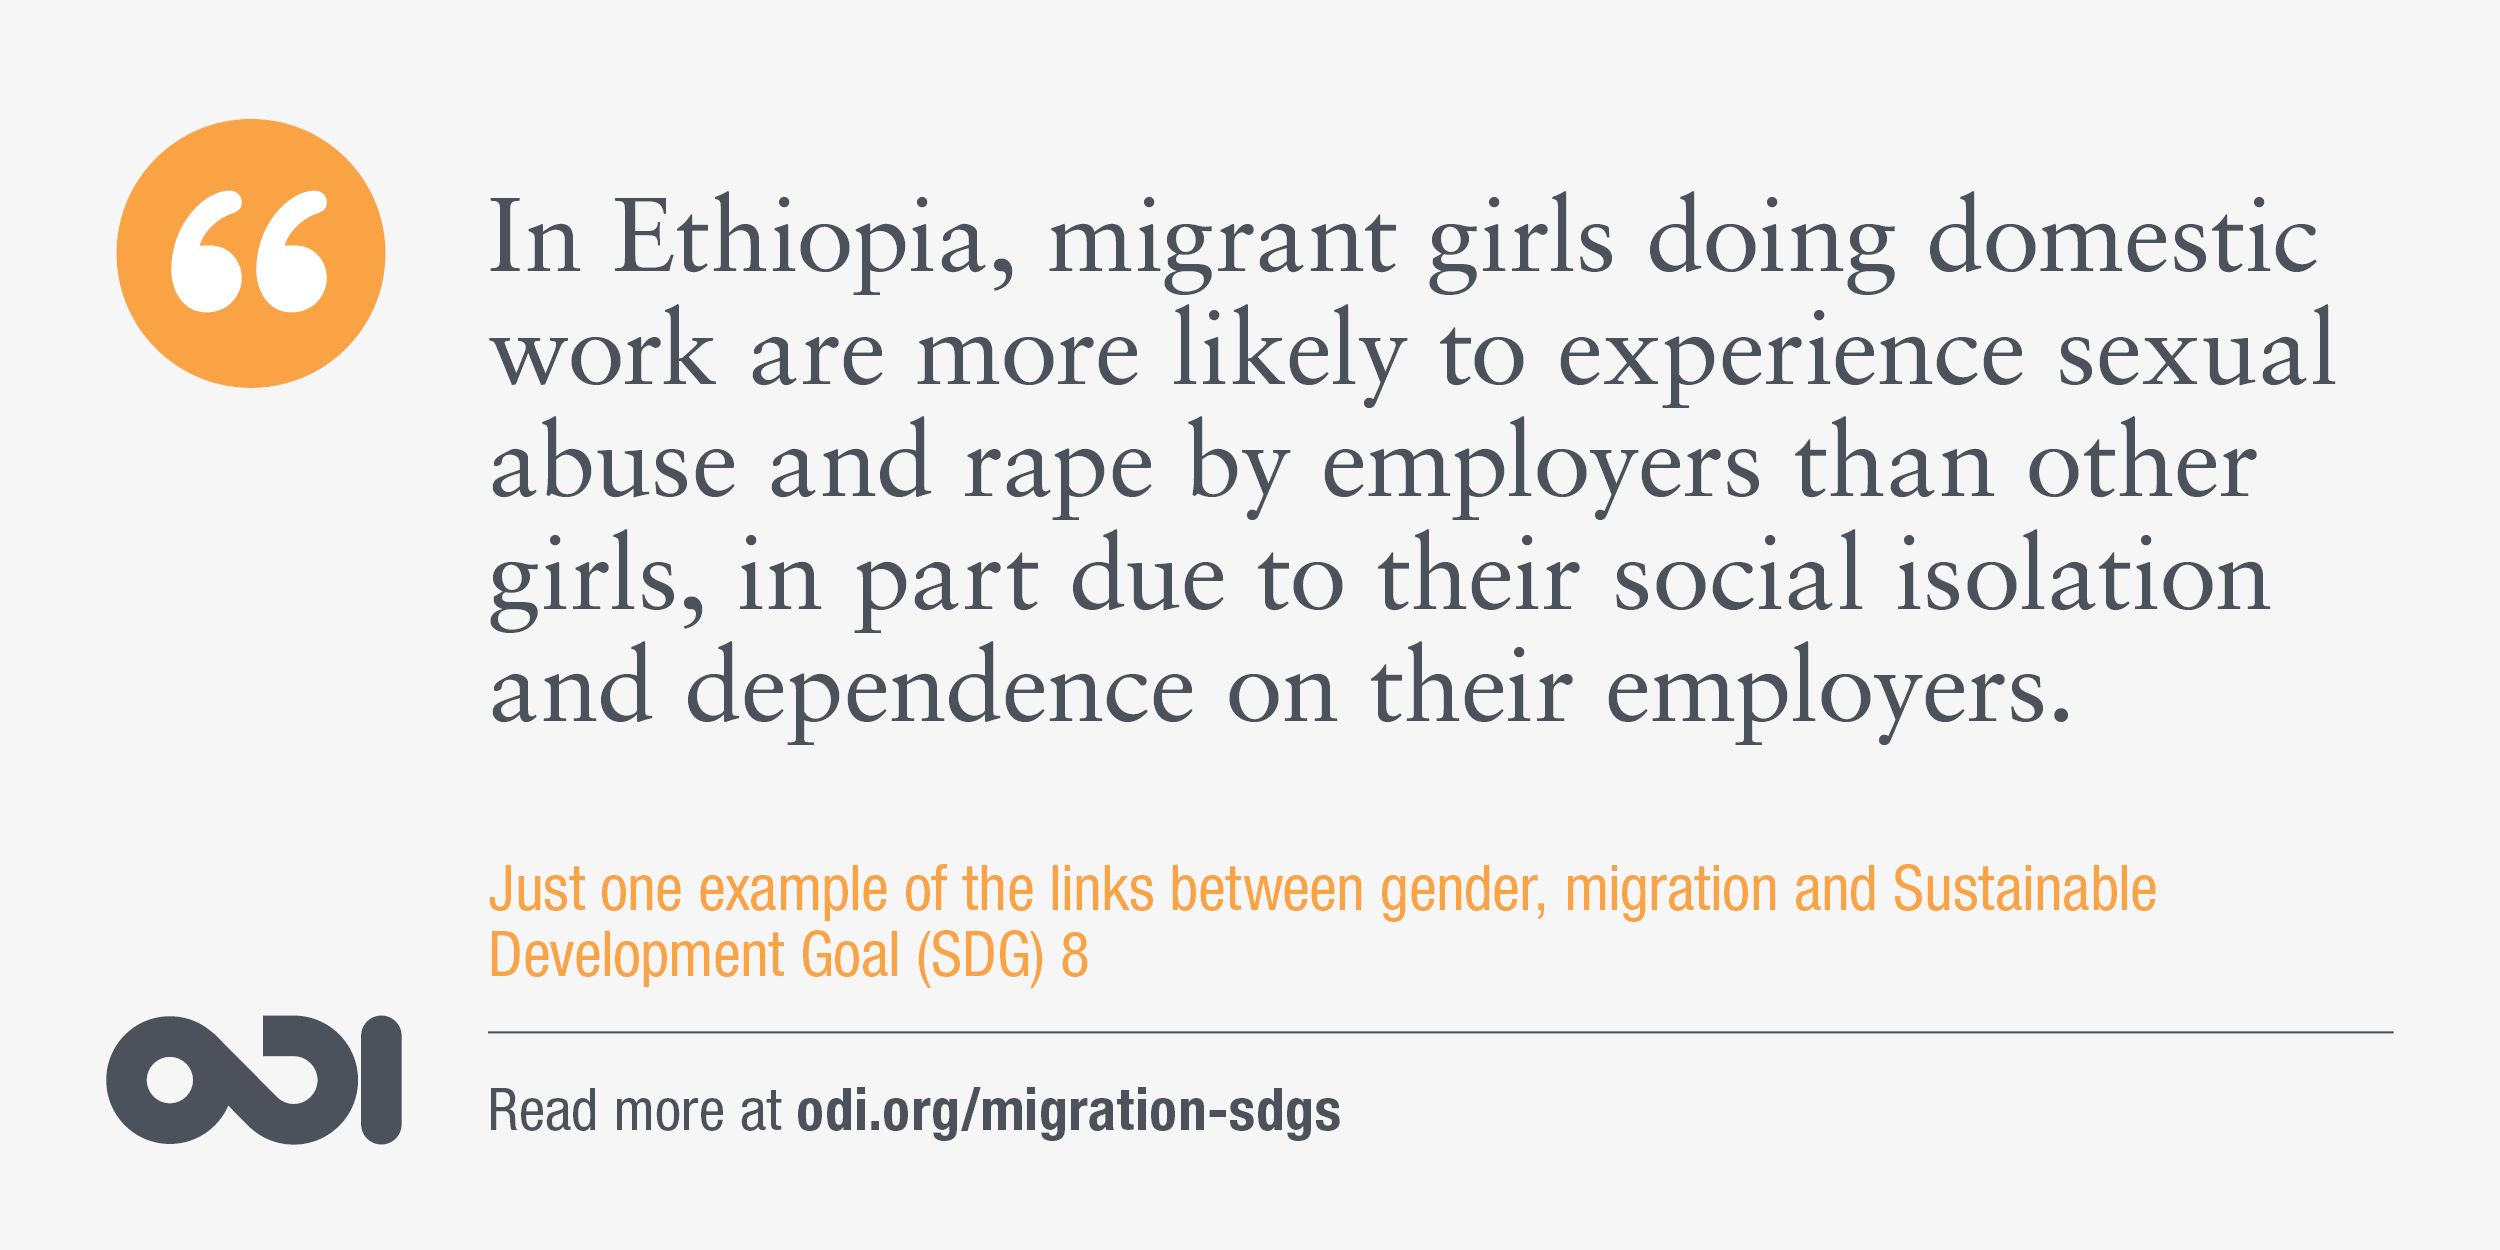 The links between gender, migration and SDG 8.